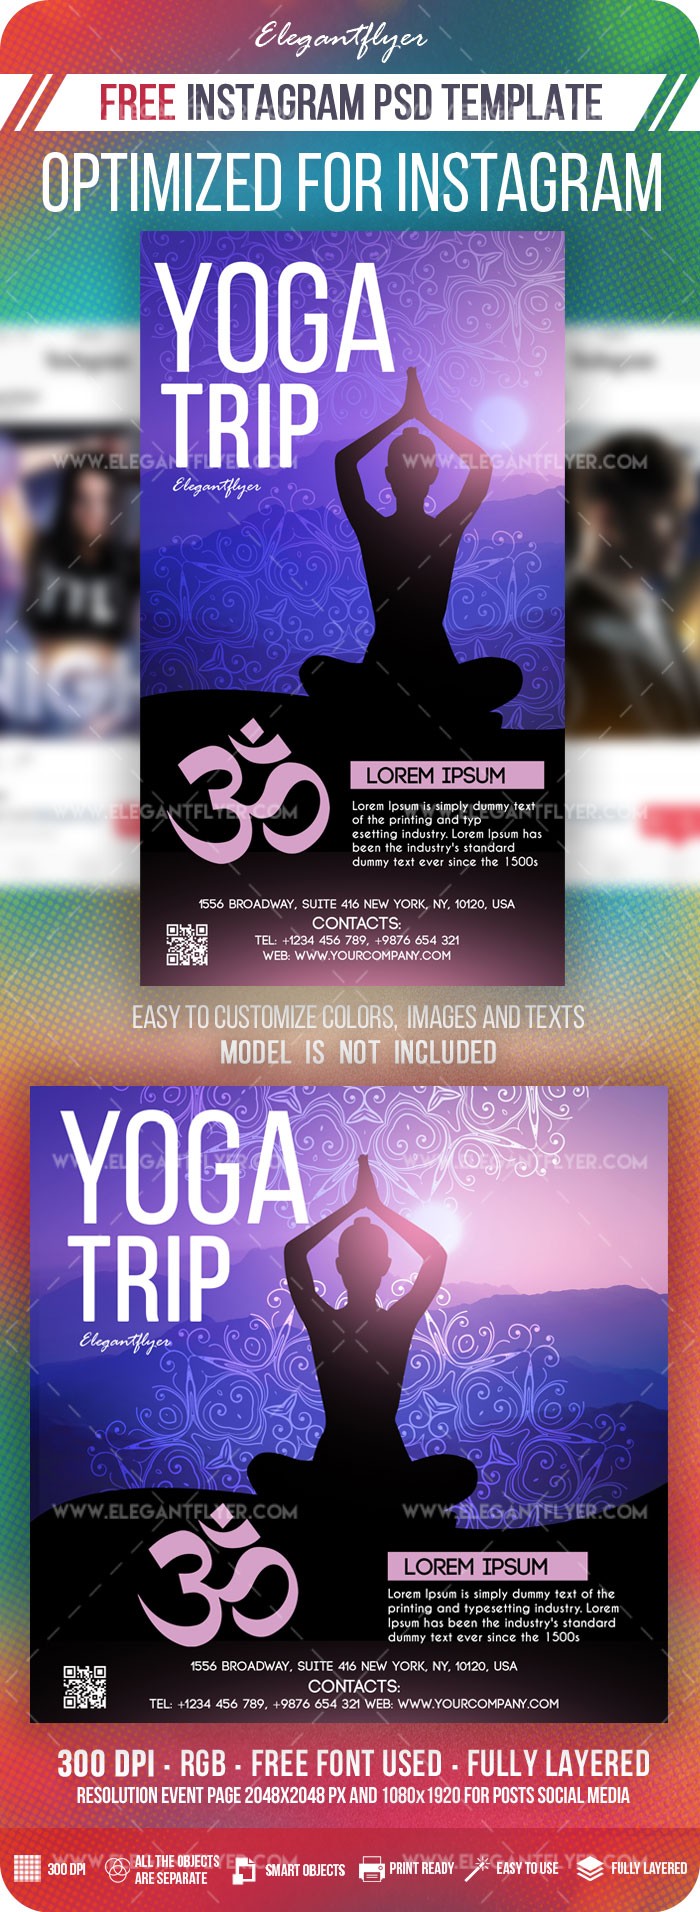 Yoga Viaggio Instagram by ElegantFlyer